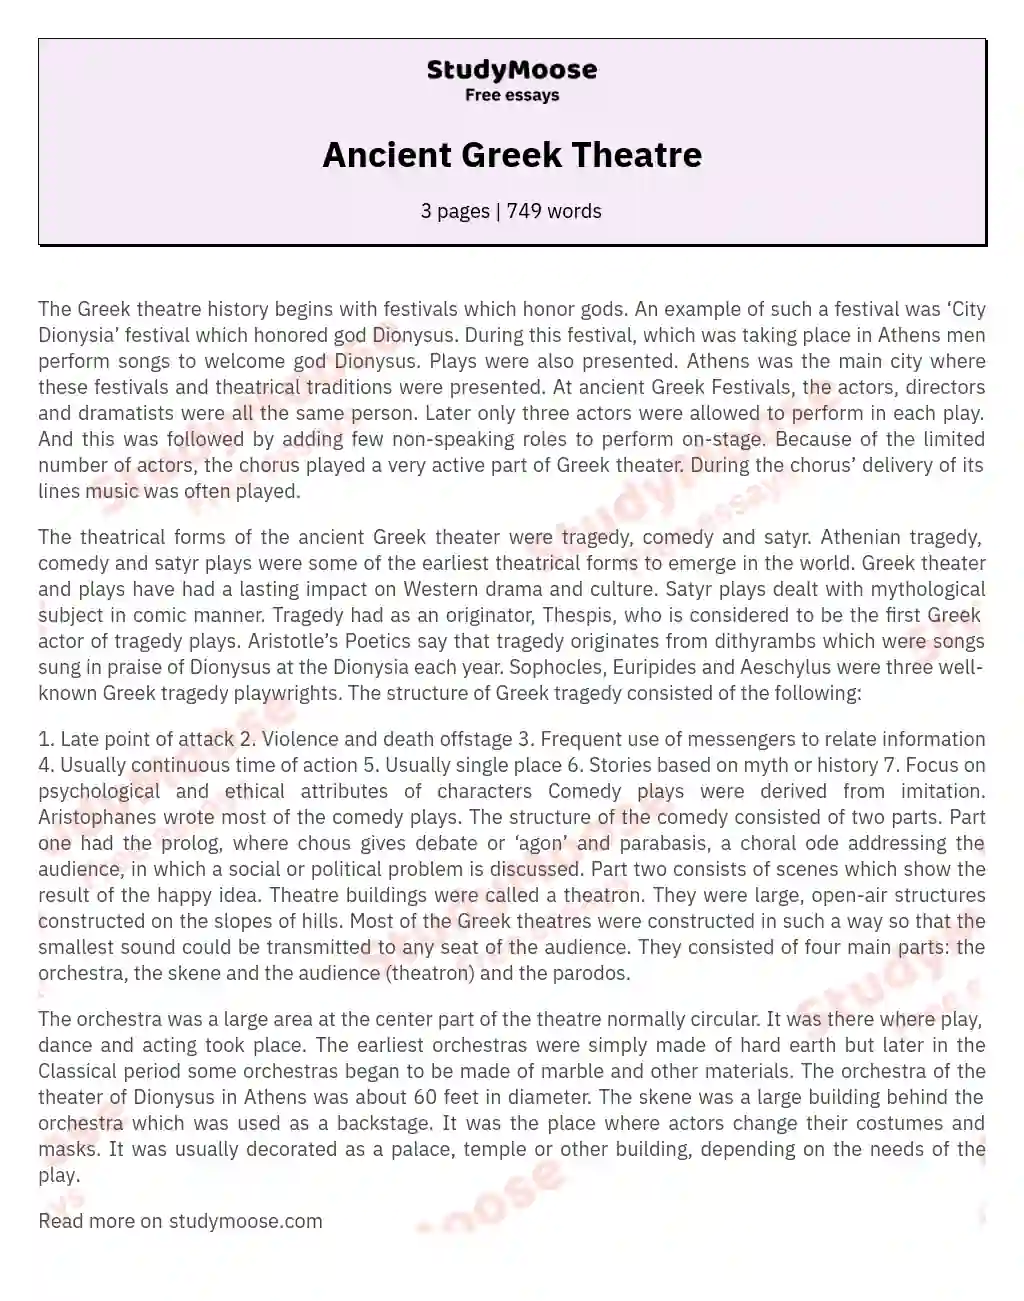 ancient greek theatre essay